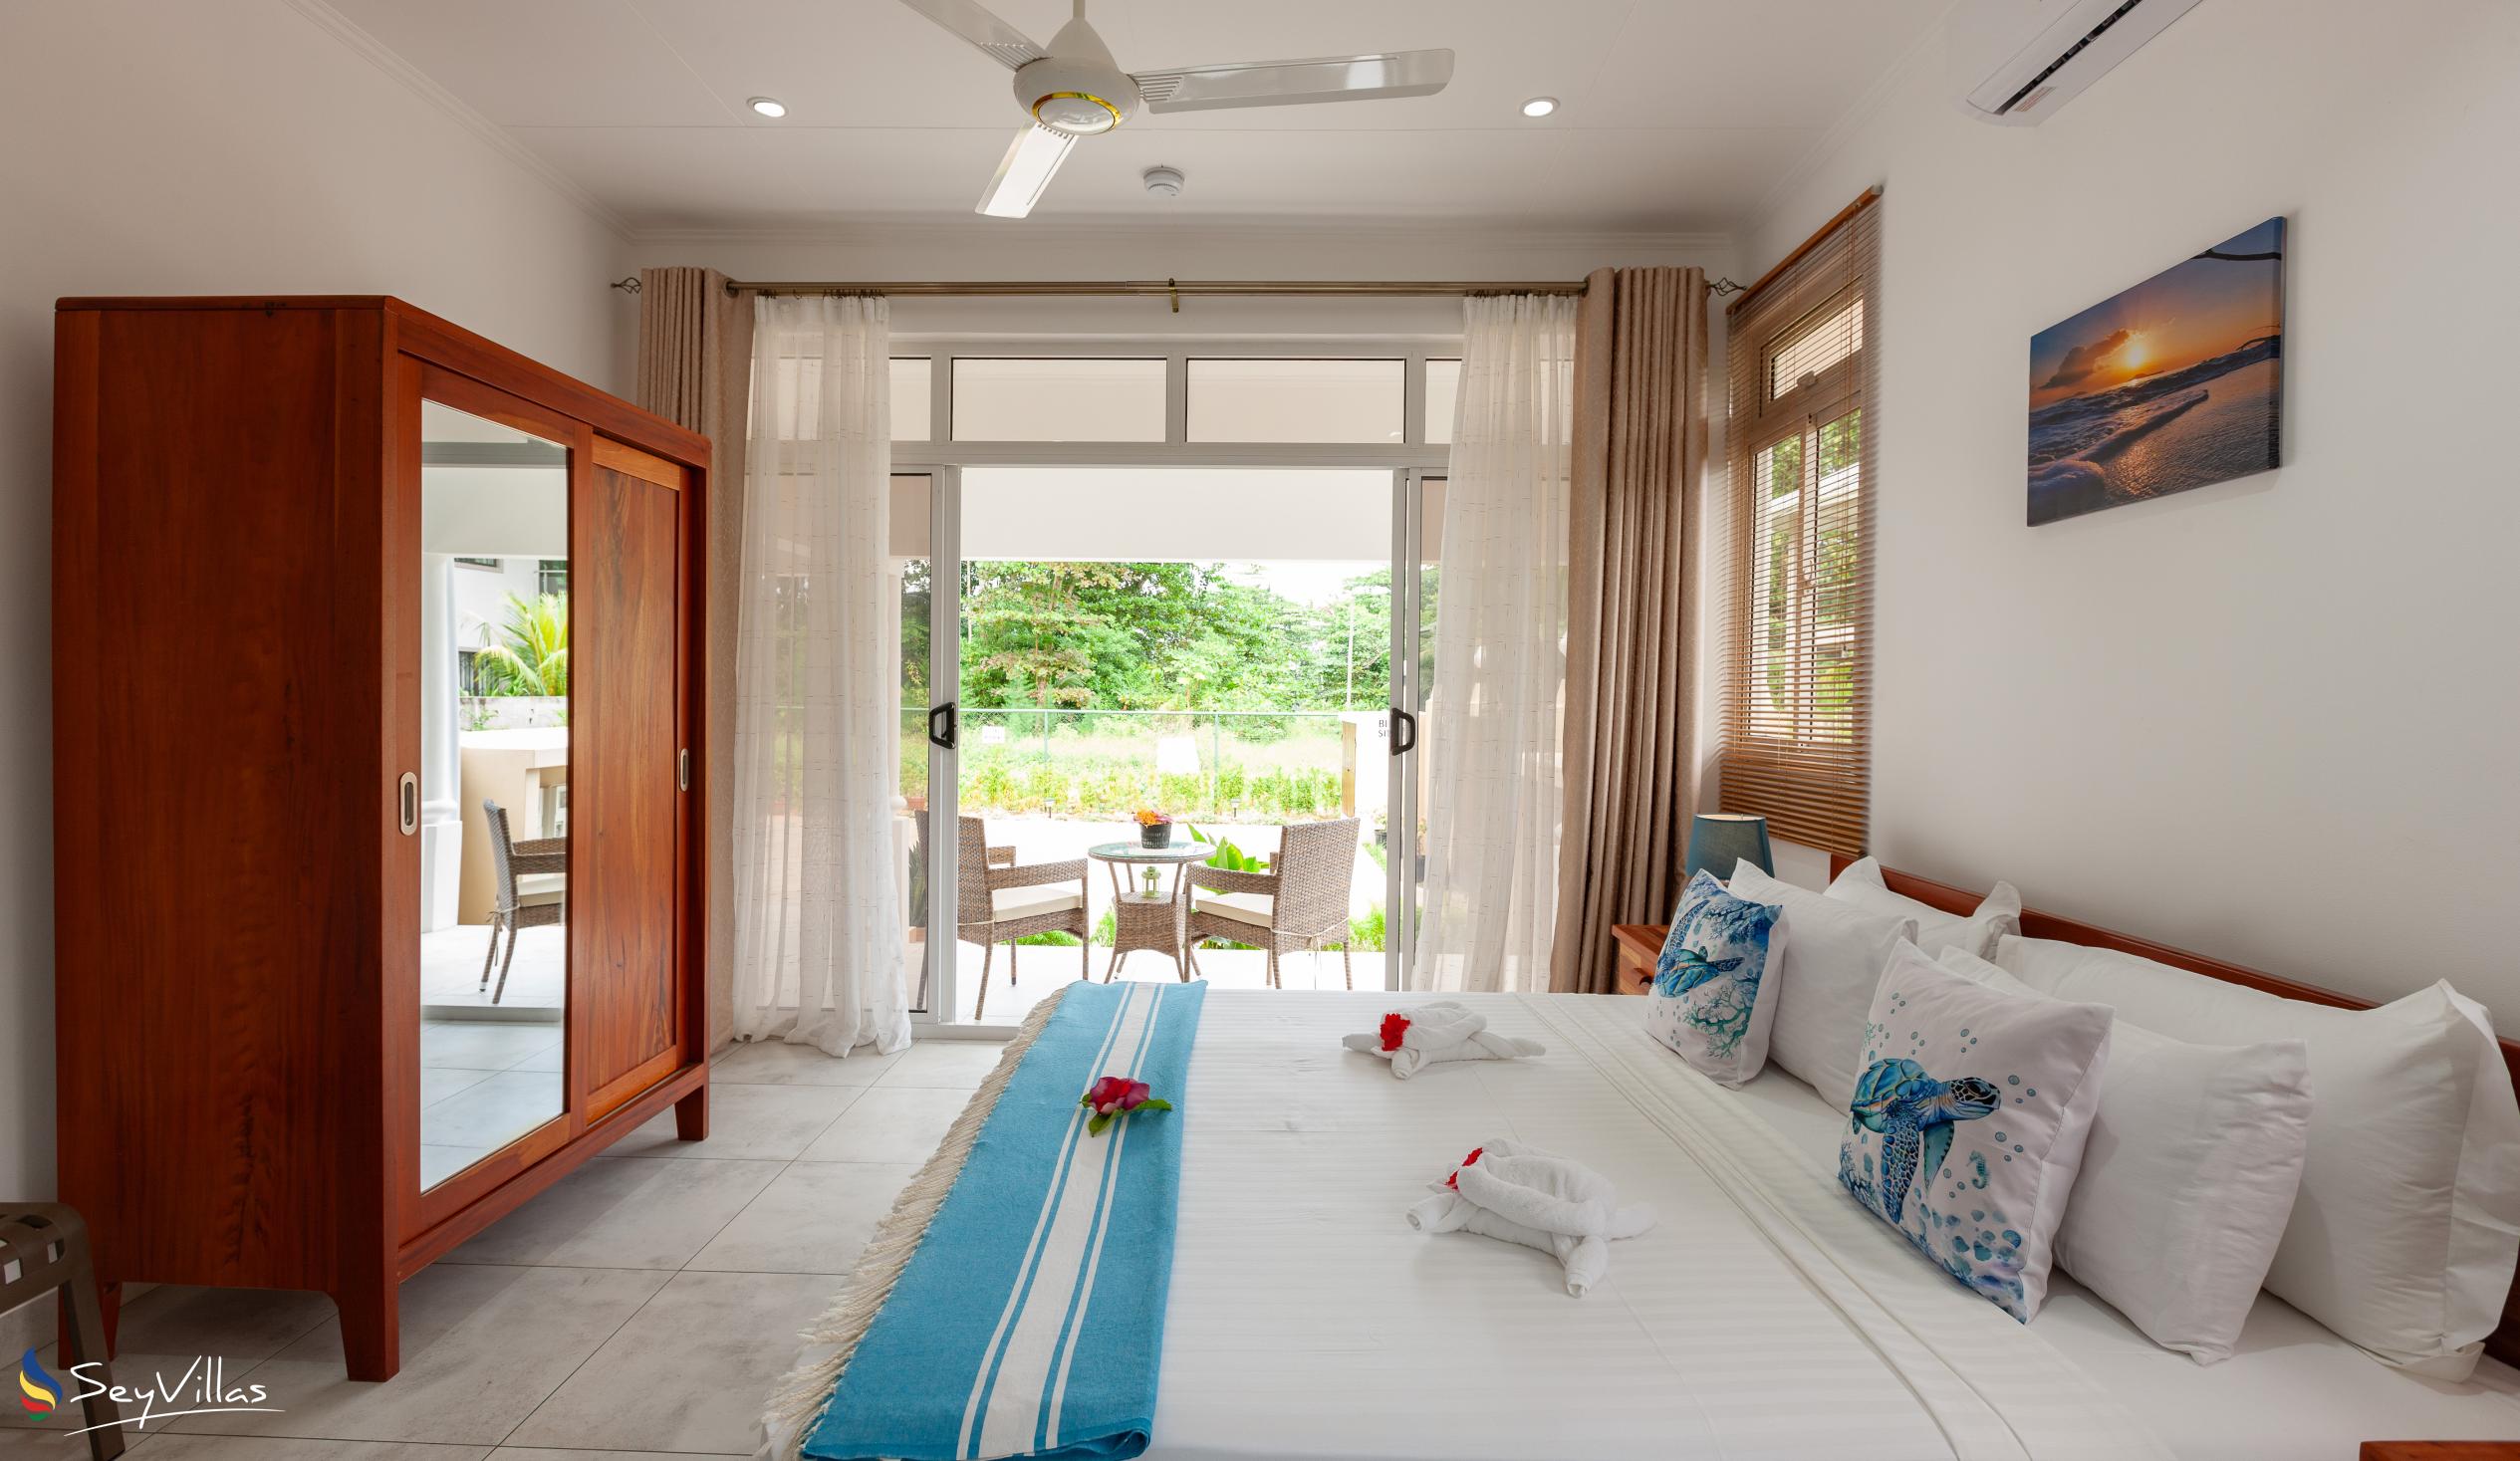 Foto 38: MacMillan's Holiday Villas - Chalet 2 chambres - Praslin (Seychelles)